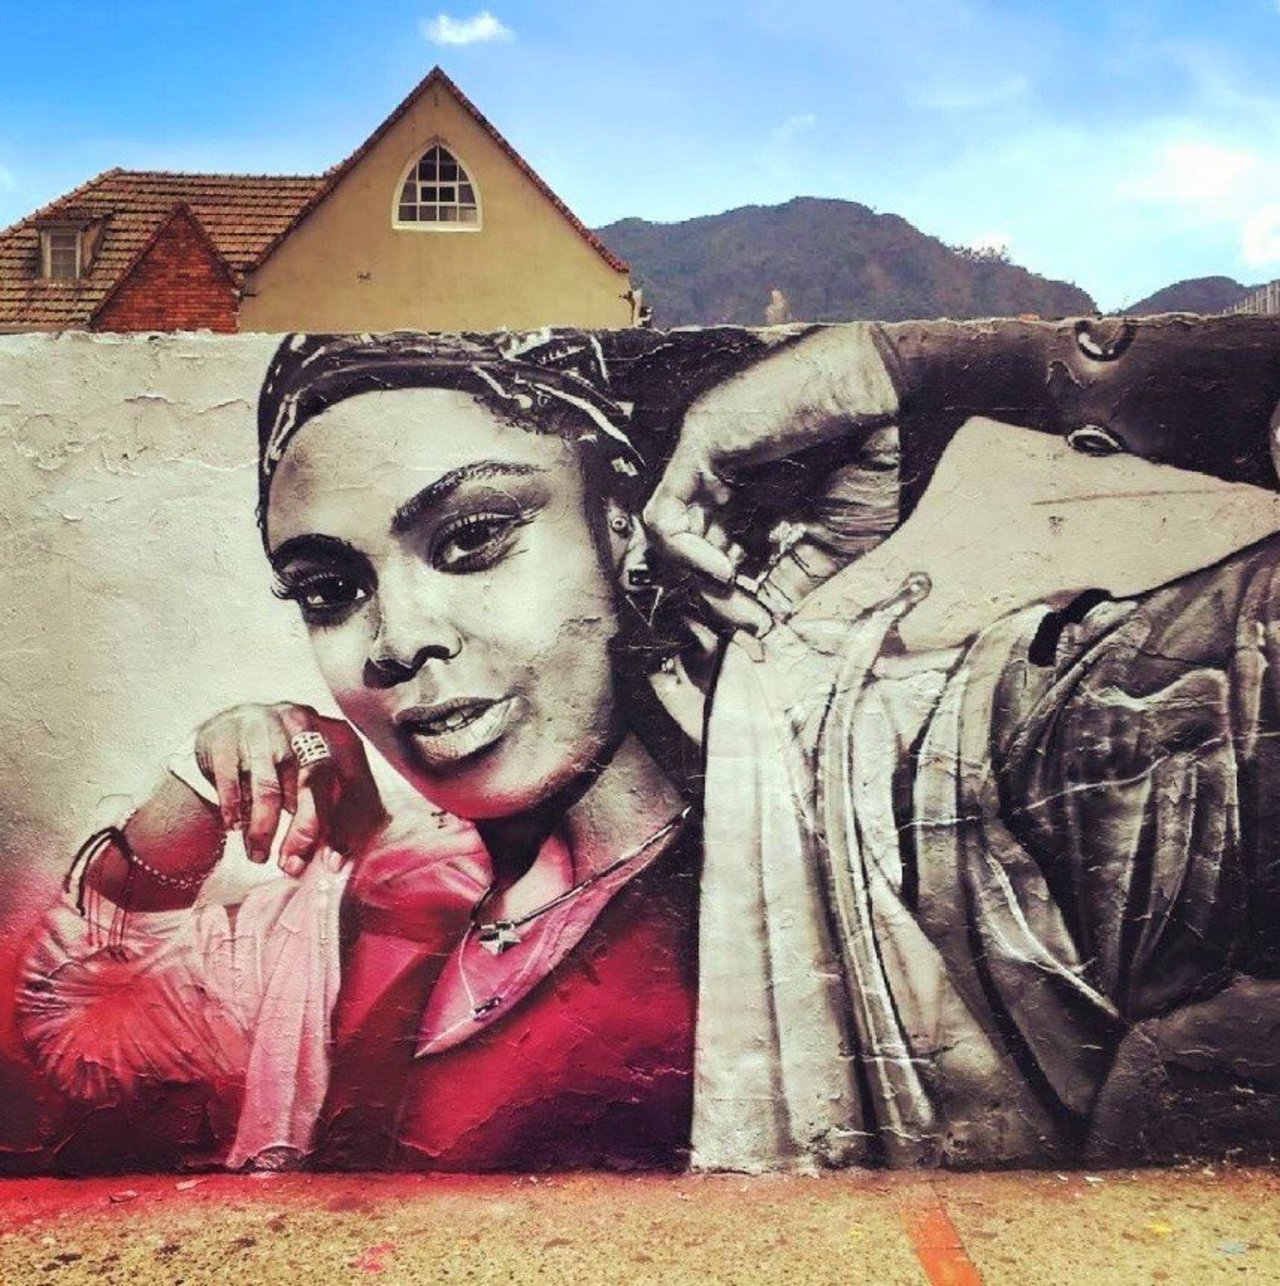 #mural by Dexs found #Bogota #Colombia #art #graffiti #streetart #urbanart https://t.co/ac6pEFBQkq